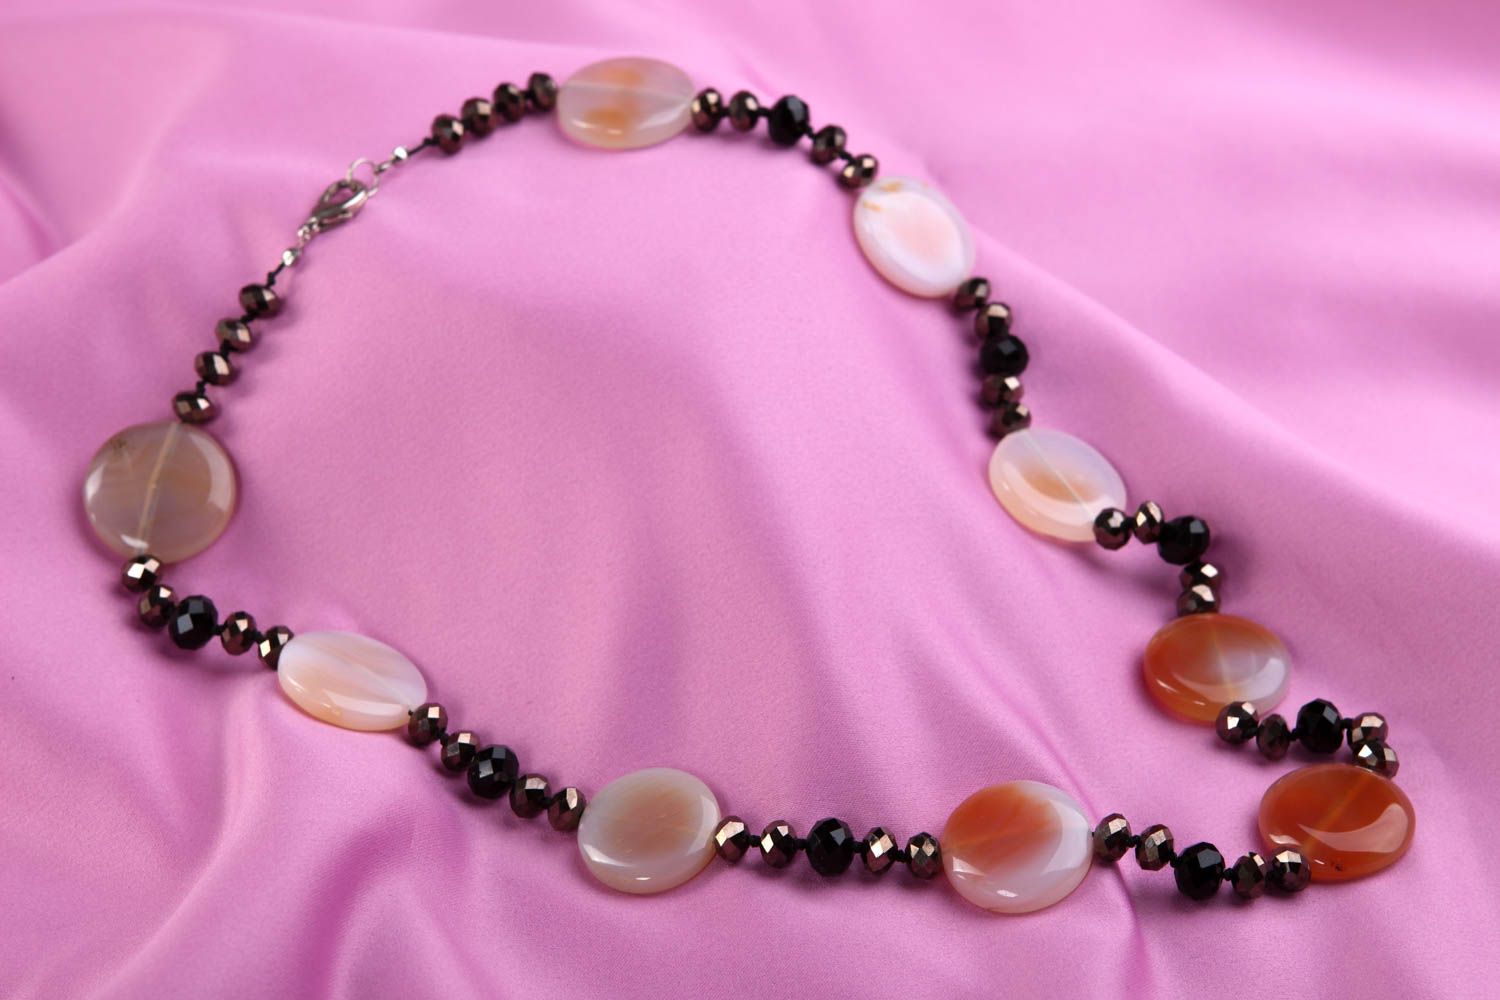 Handmade necklace bead necklace gemstone jewelry designer accessories gift ideas photo 1